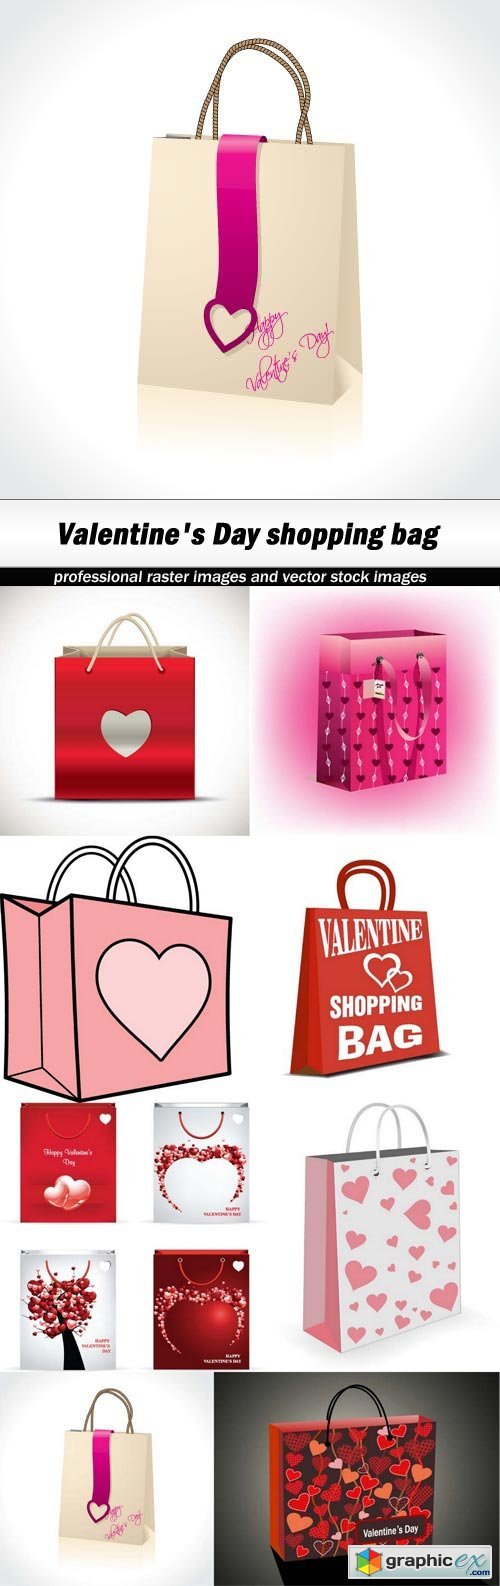 Valentine's Day shopping bag